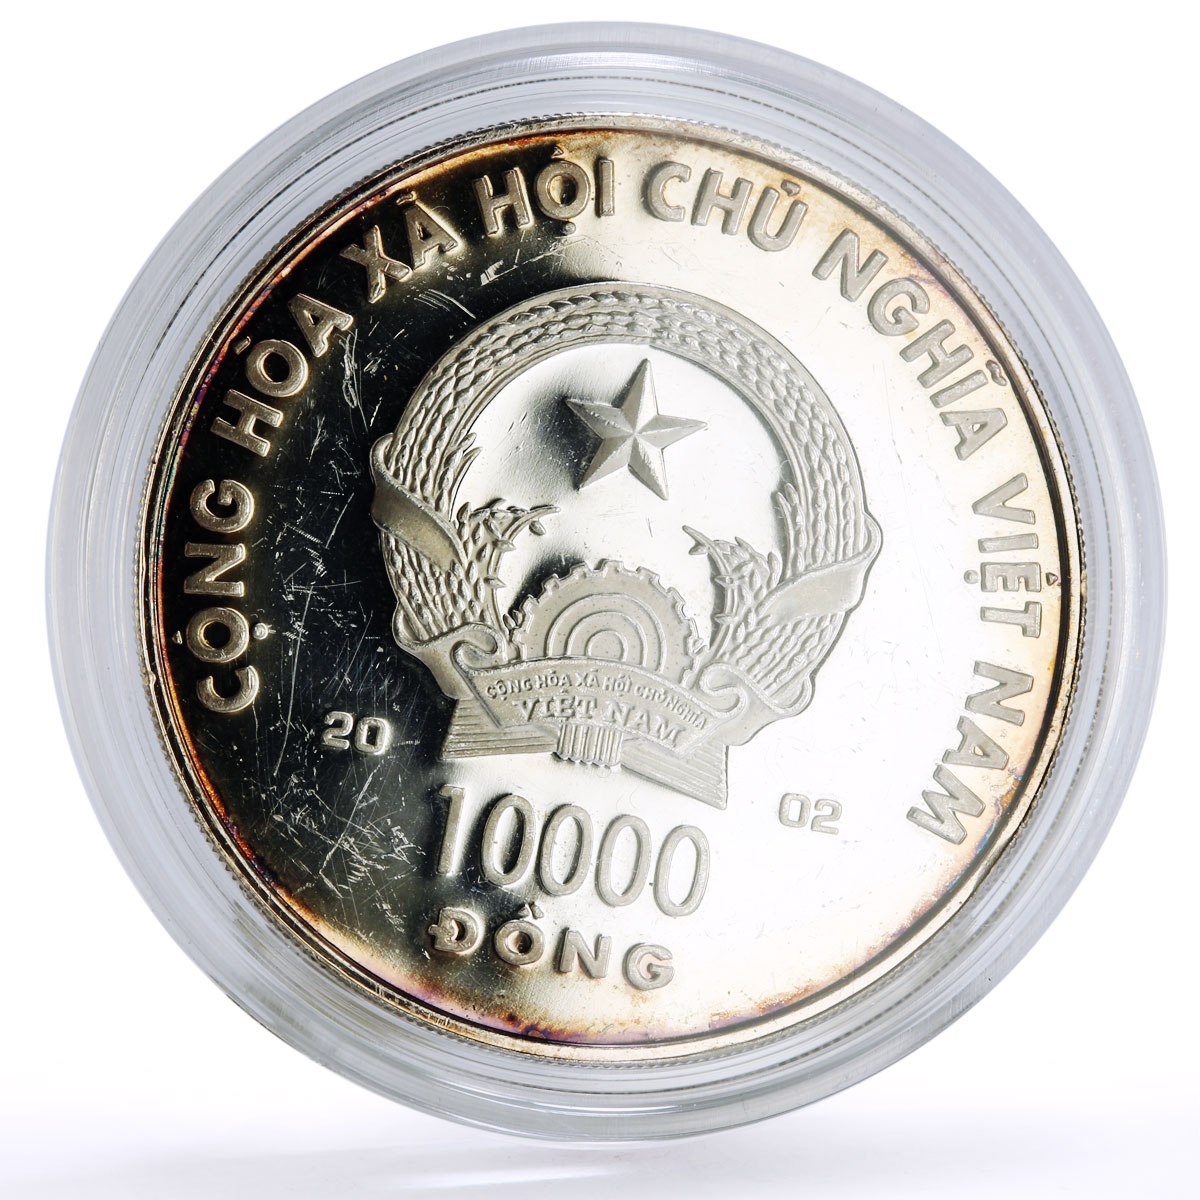 Vietnam 10000 dong Lunar Calendar Year of the Horse proof silver coin 2002